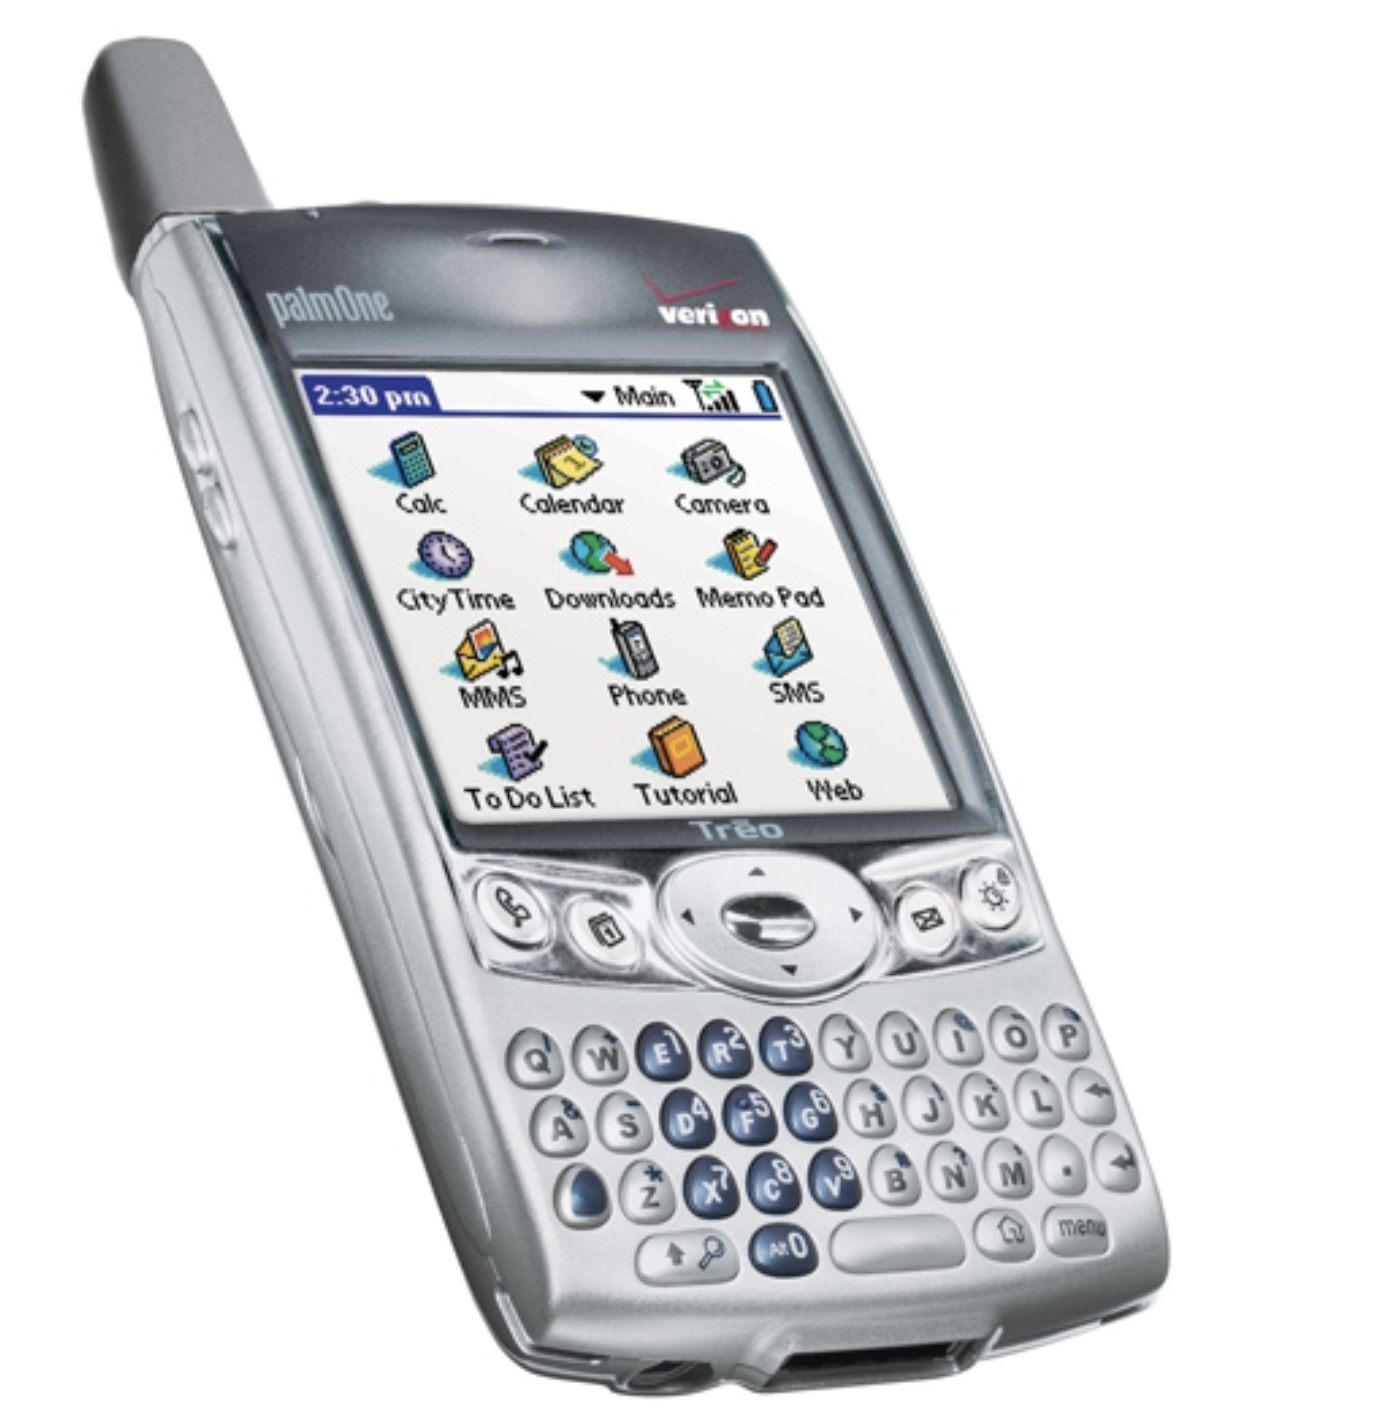 Сотовый телефон объявления. Palm treo 600. Palm treo 600 (2003 год). Palm treo 650. Sony Ericsson коммуникатор 2003 года.